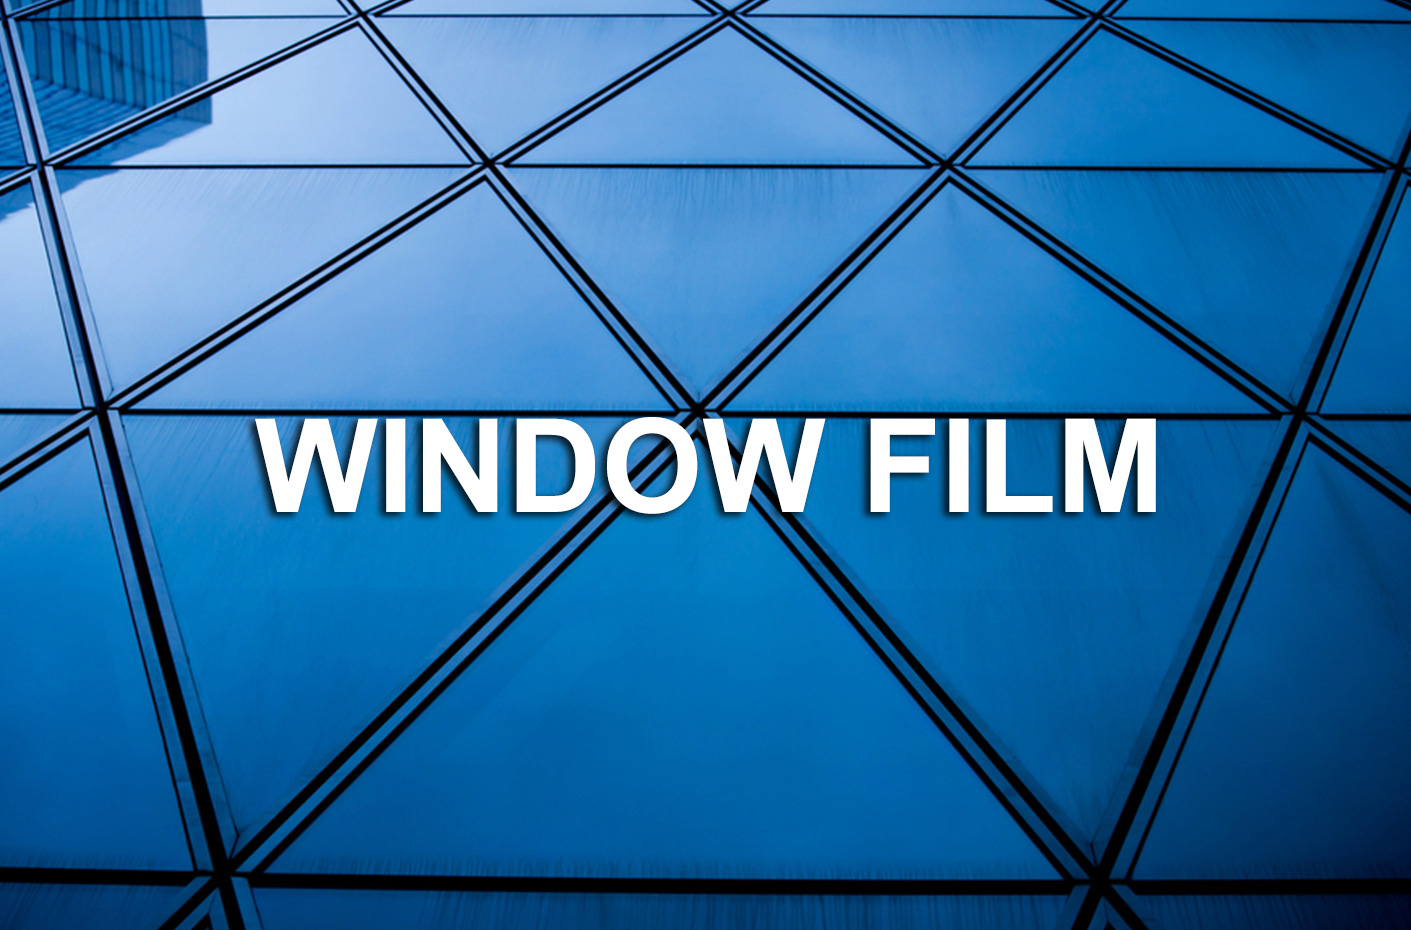 WINDOW-FILM-TEXT